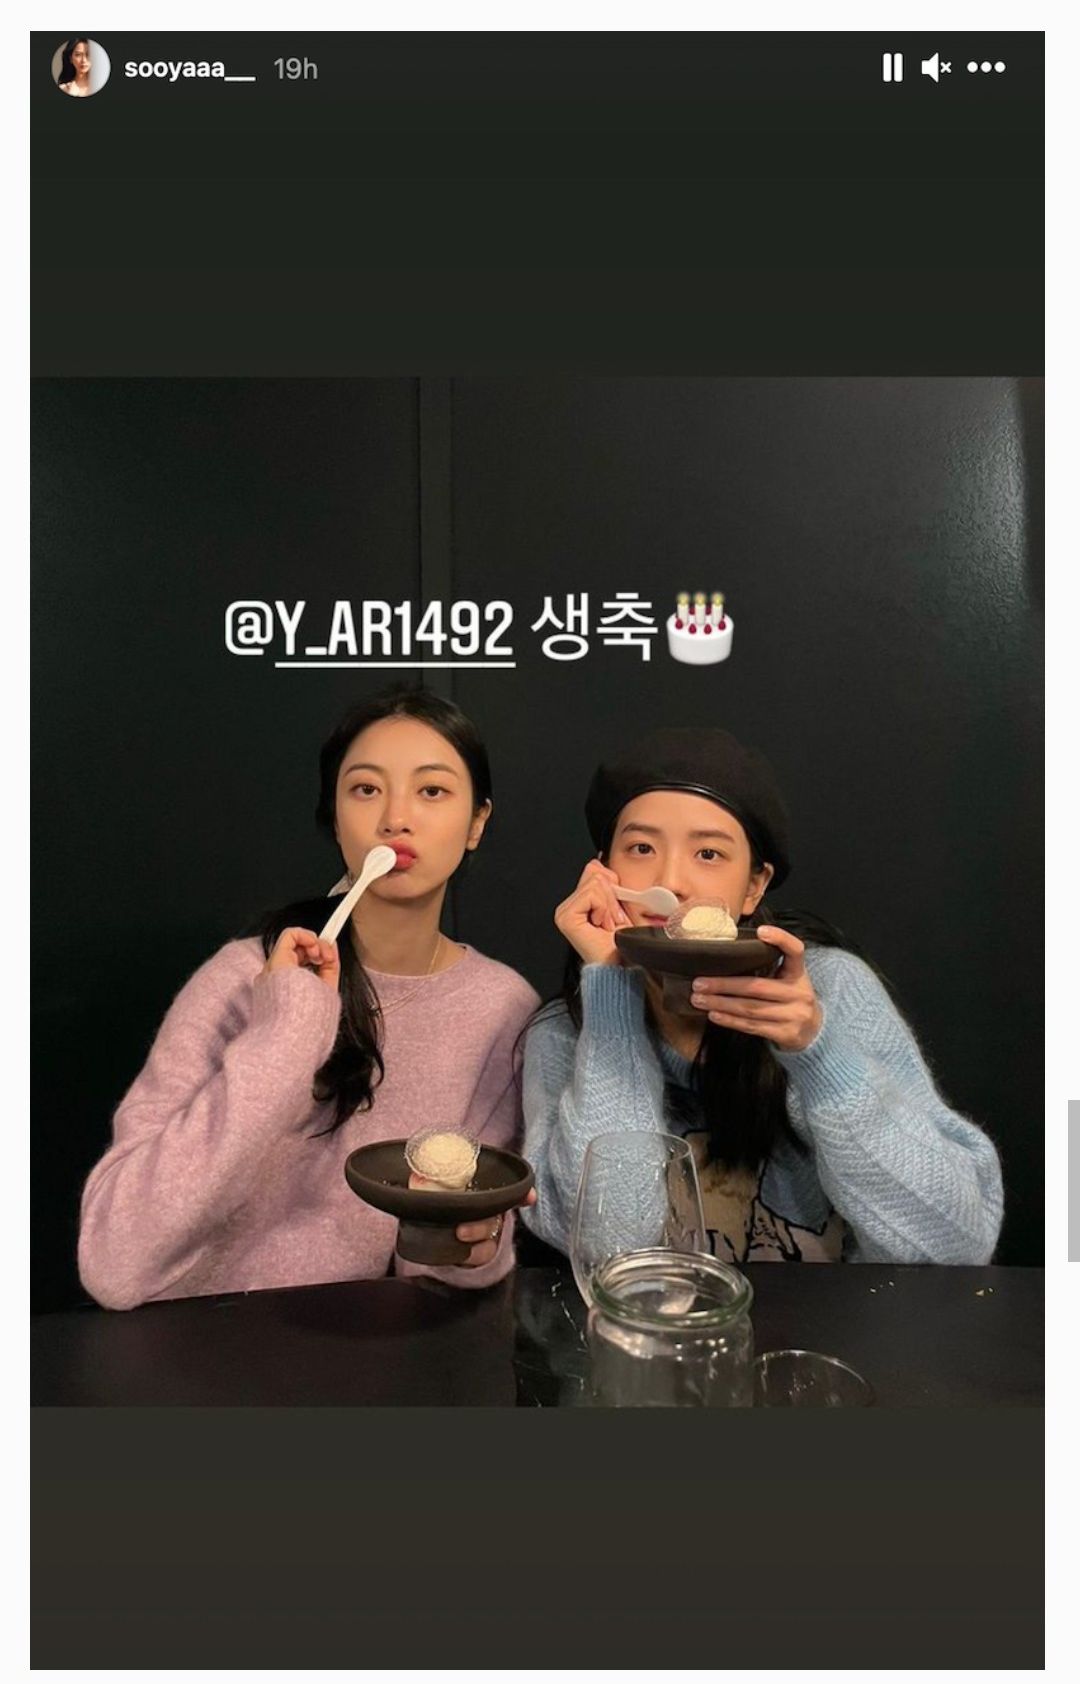 Jisoo BLACKPINK dan Soojin tangkapan layar Instagram story